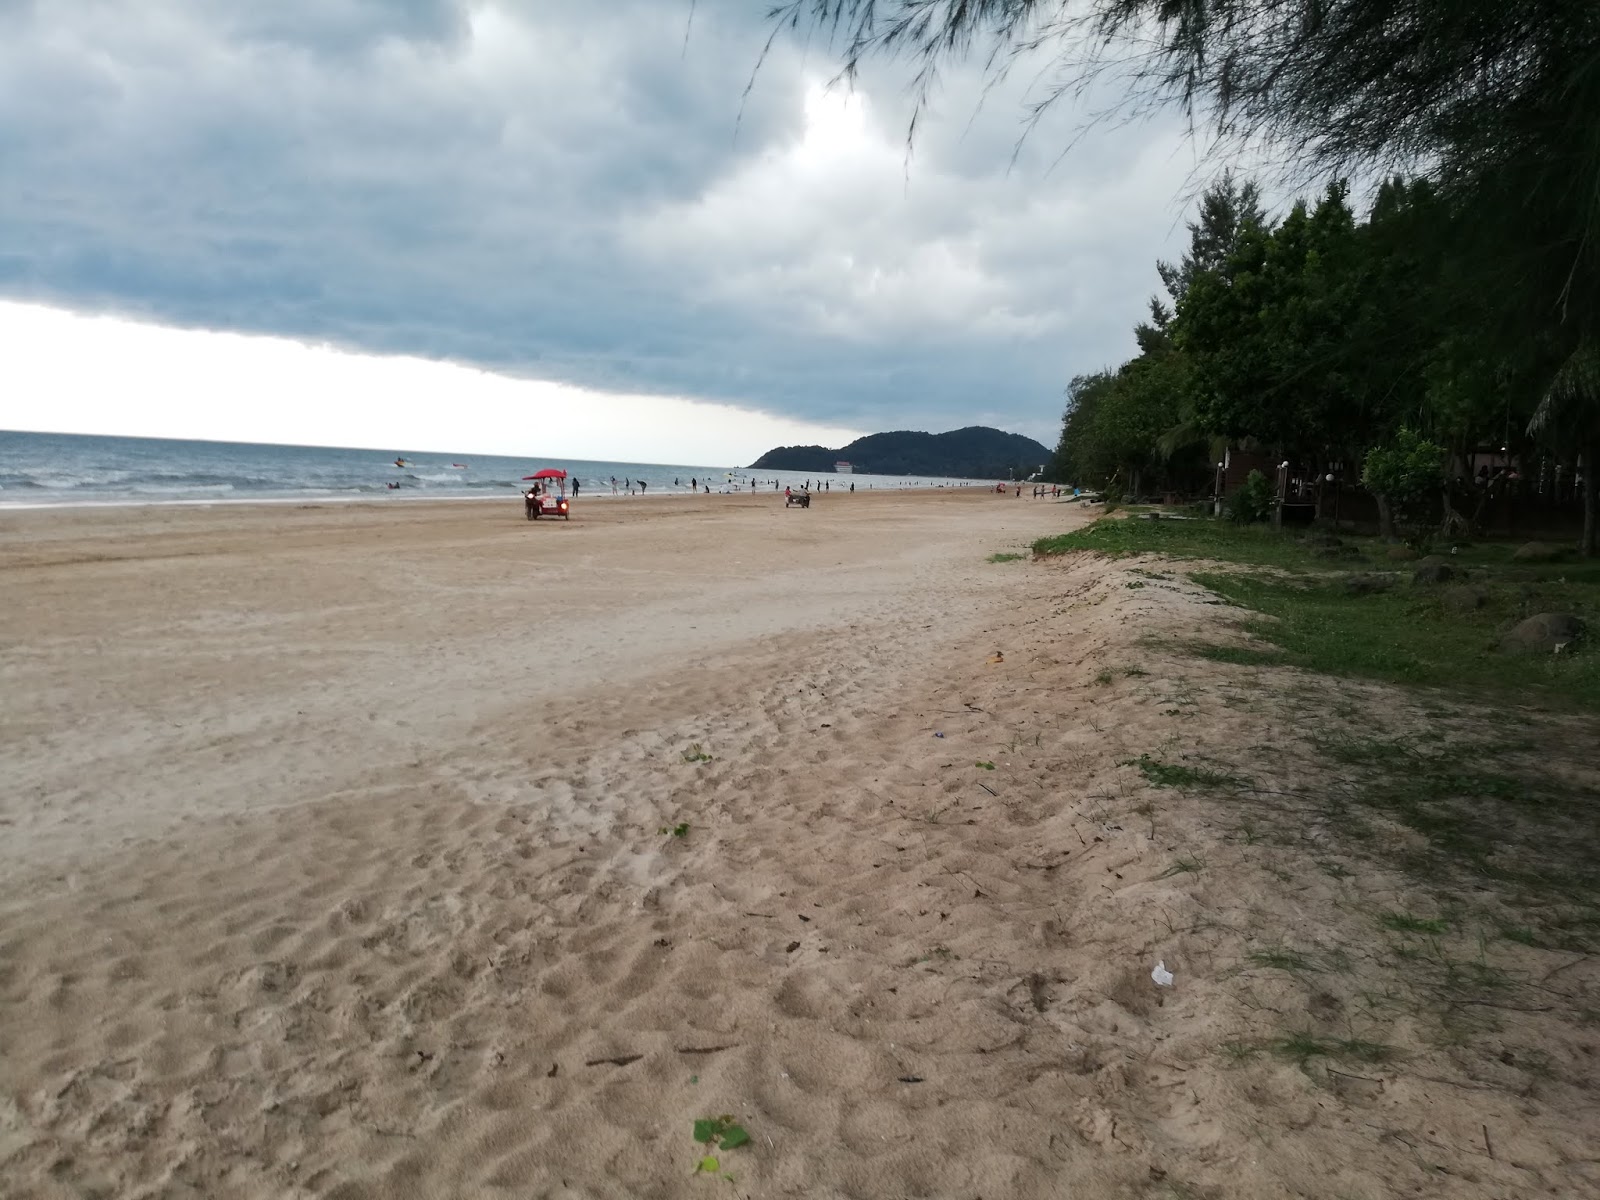 Foto de Chao Lao Beach - lugar popular entre os apreciadores de relaxamento